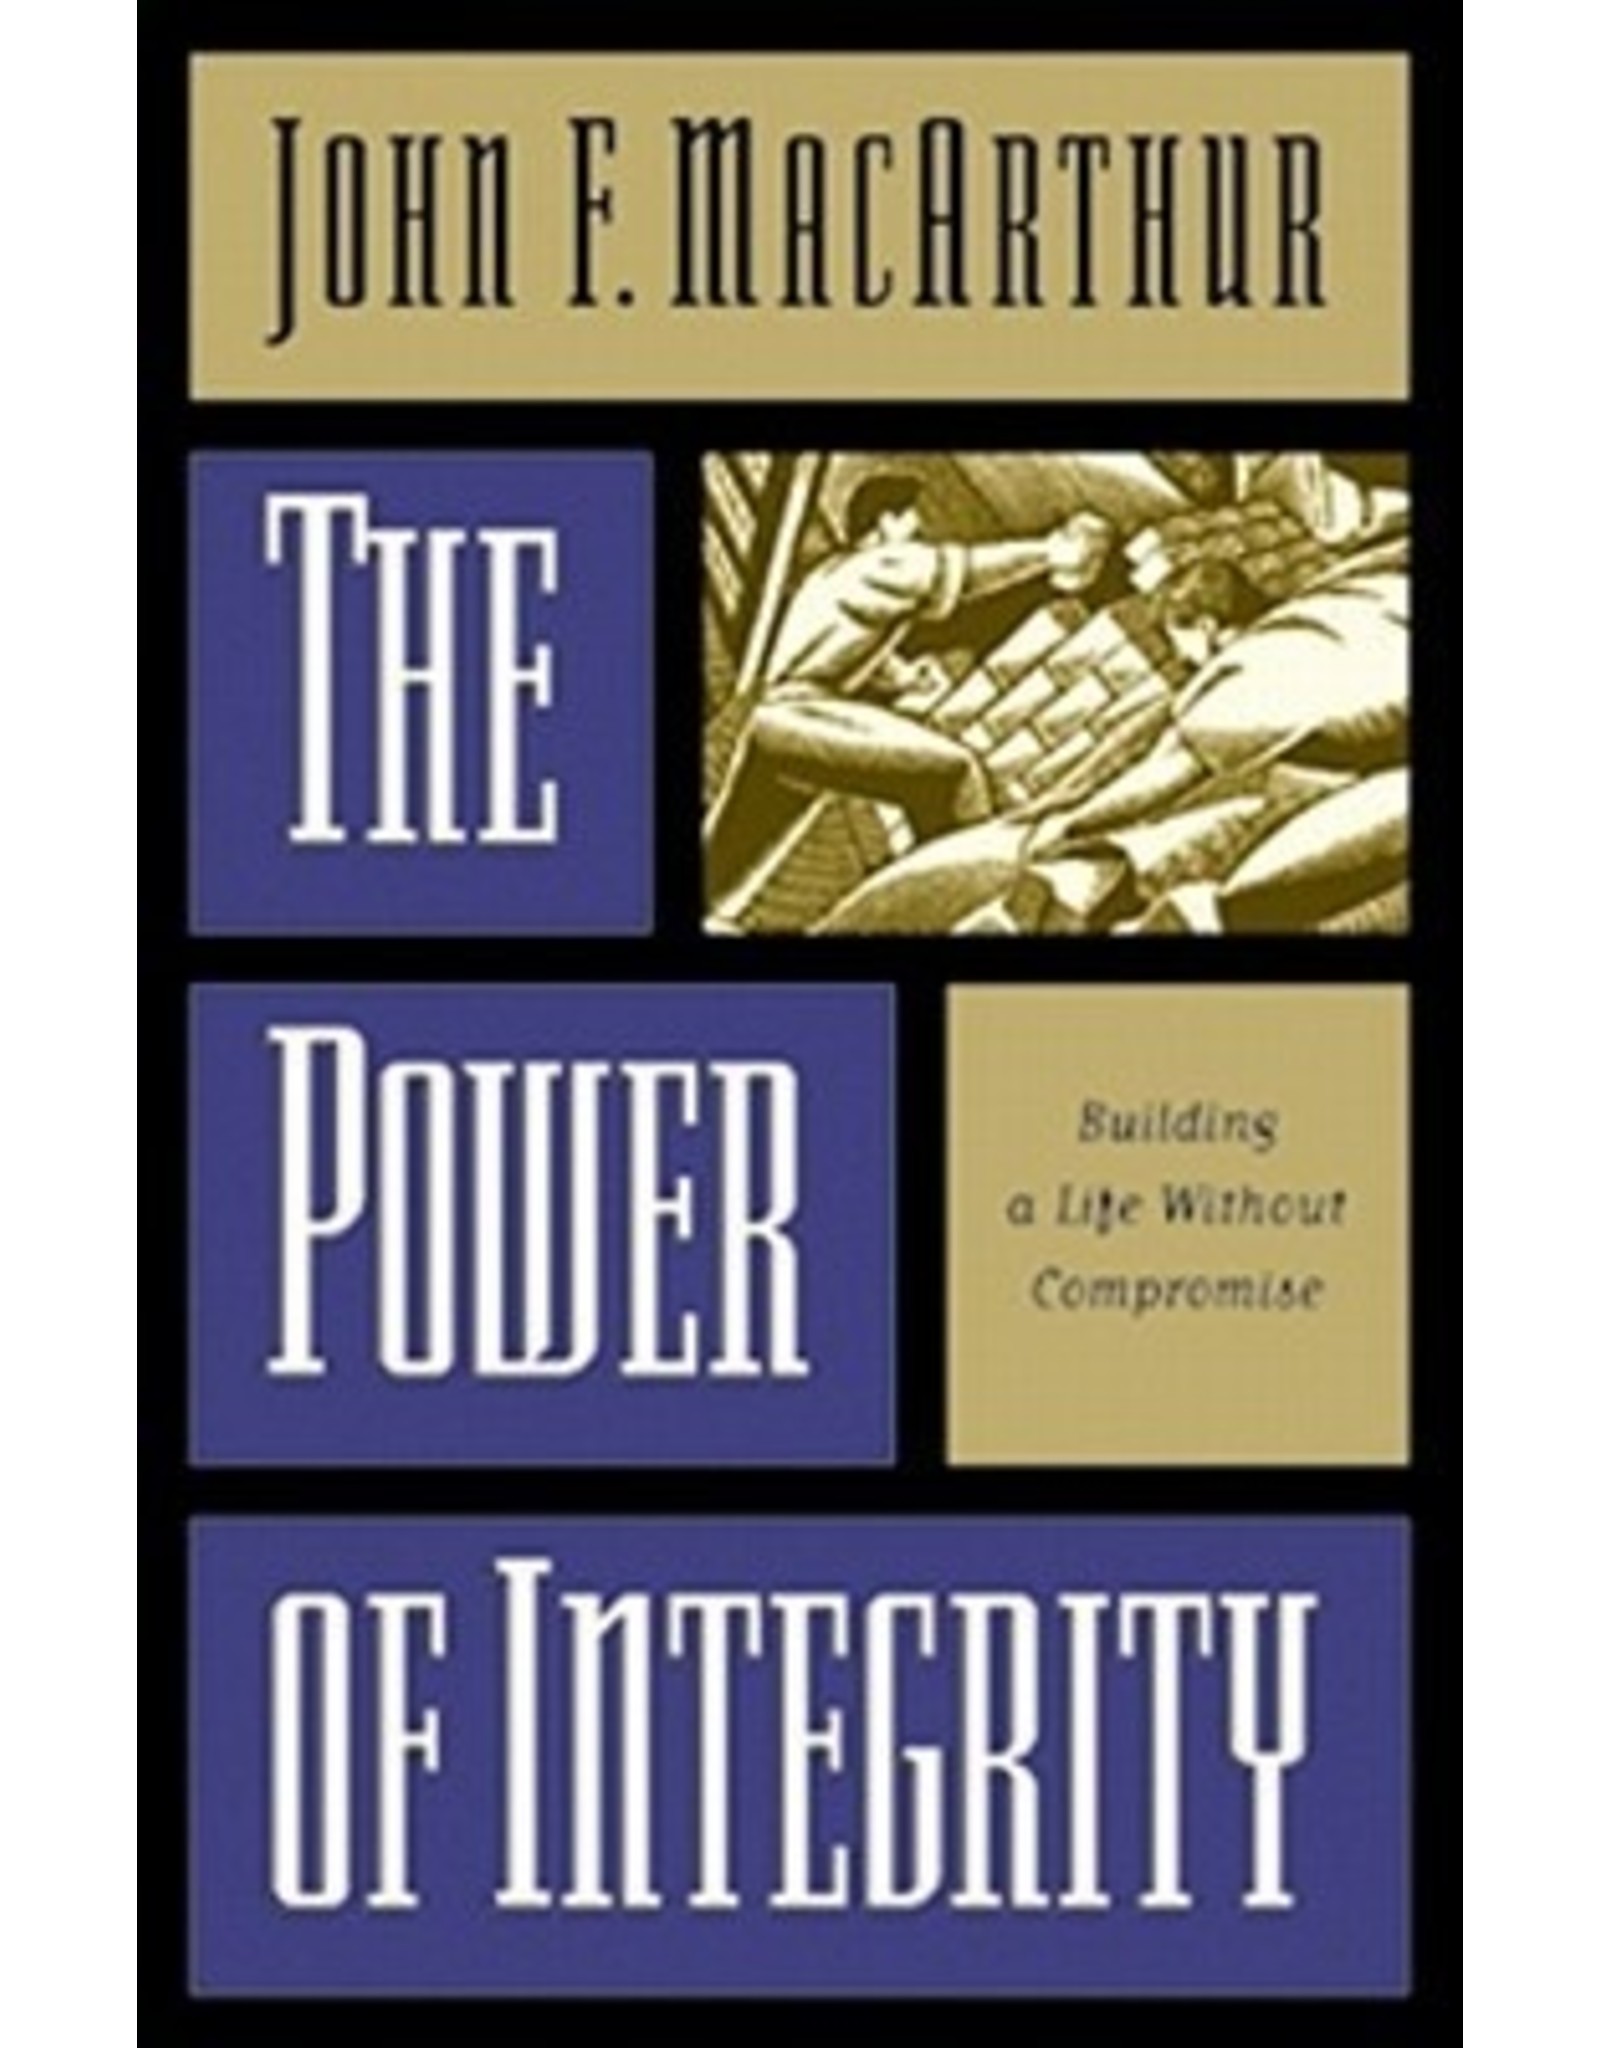 John MacArthur The Power of Integrity